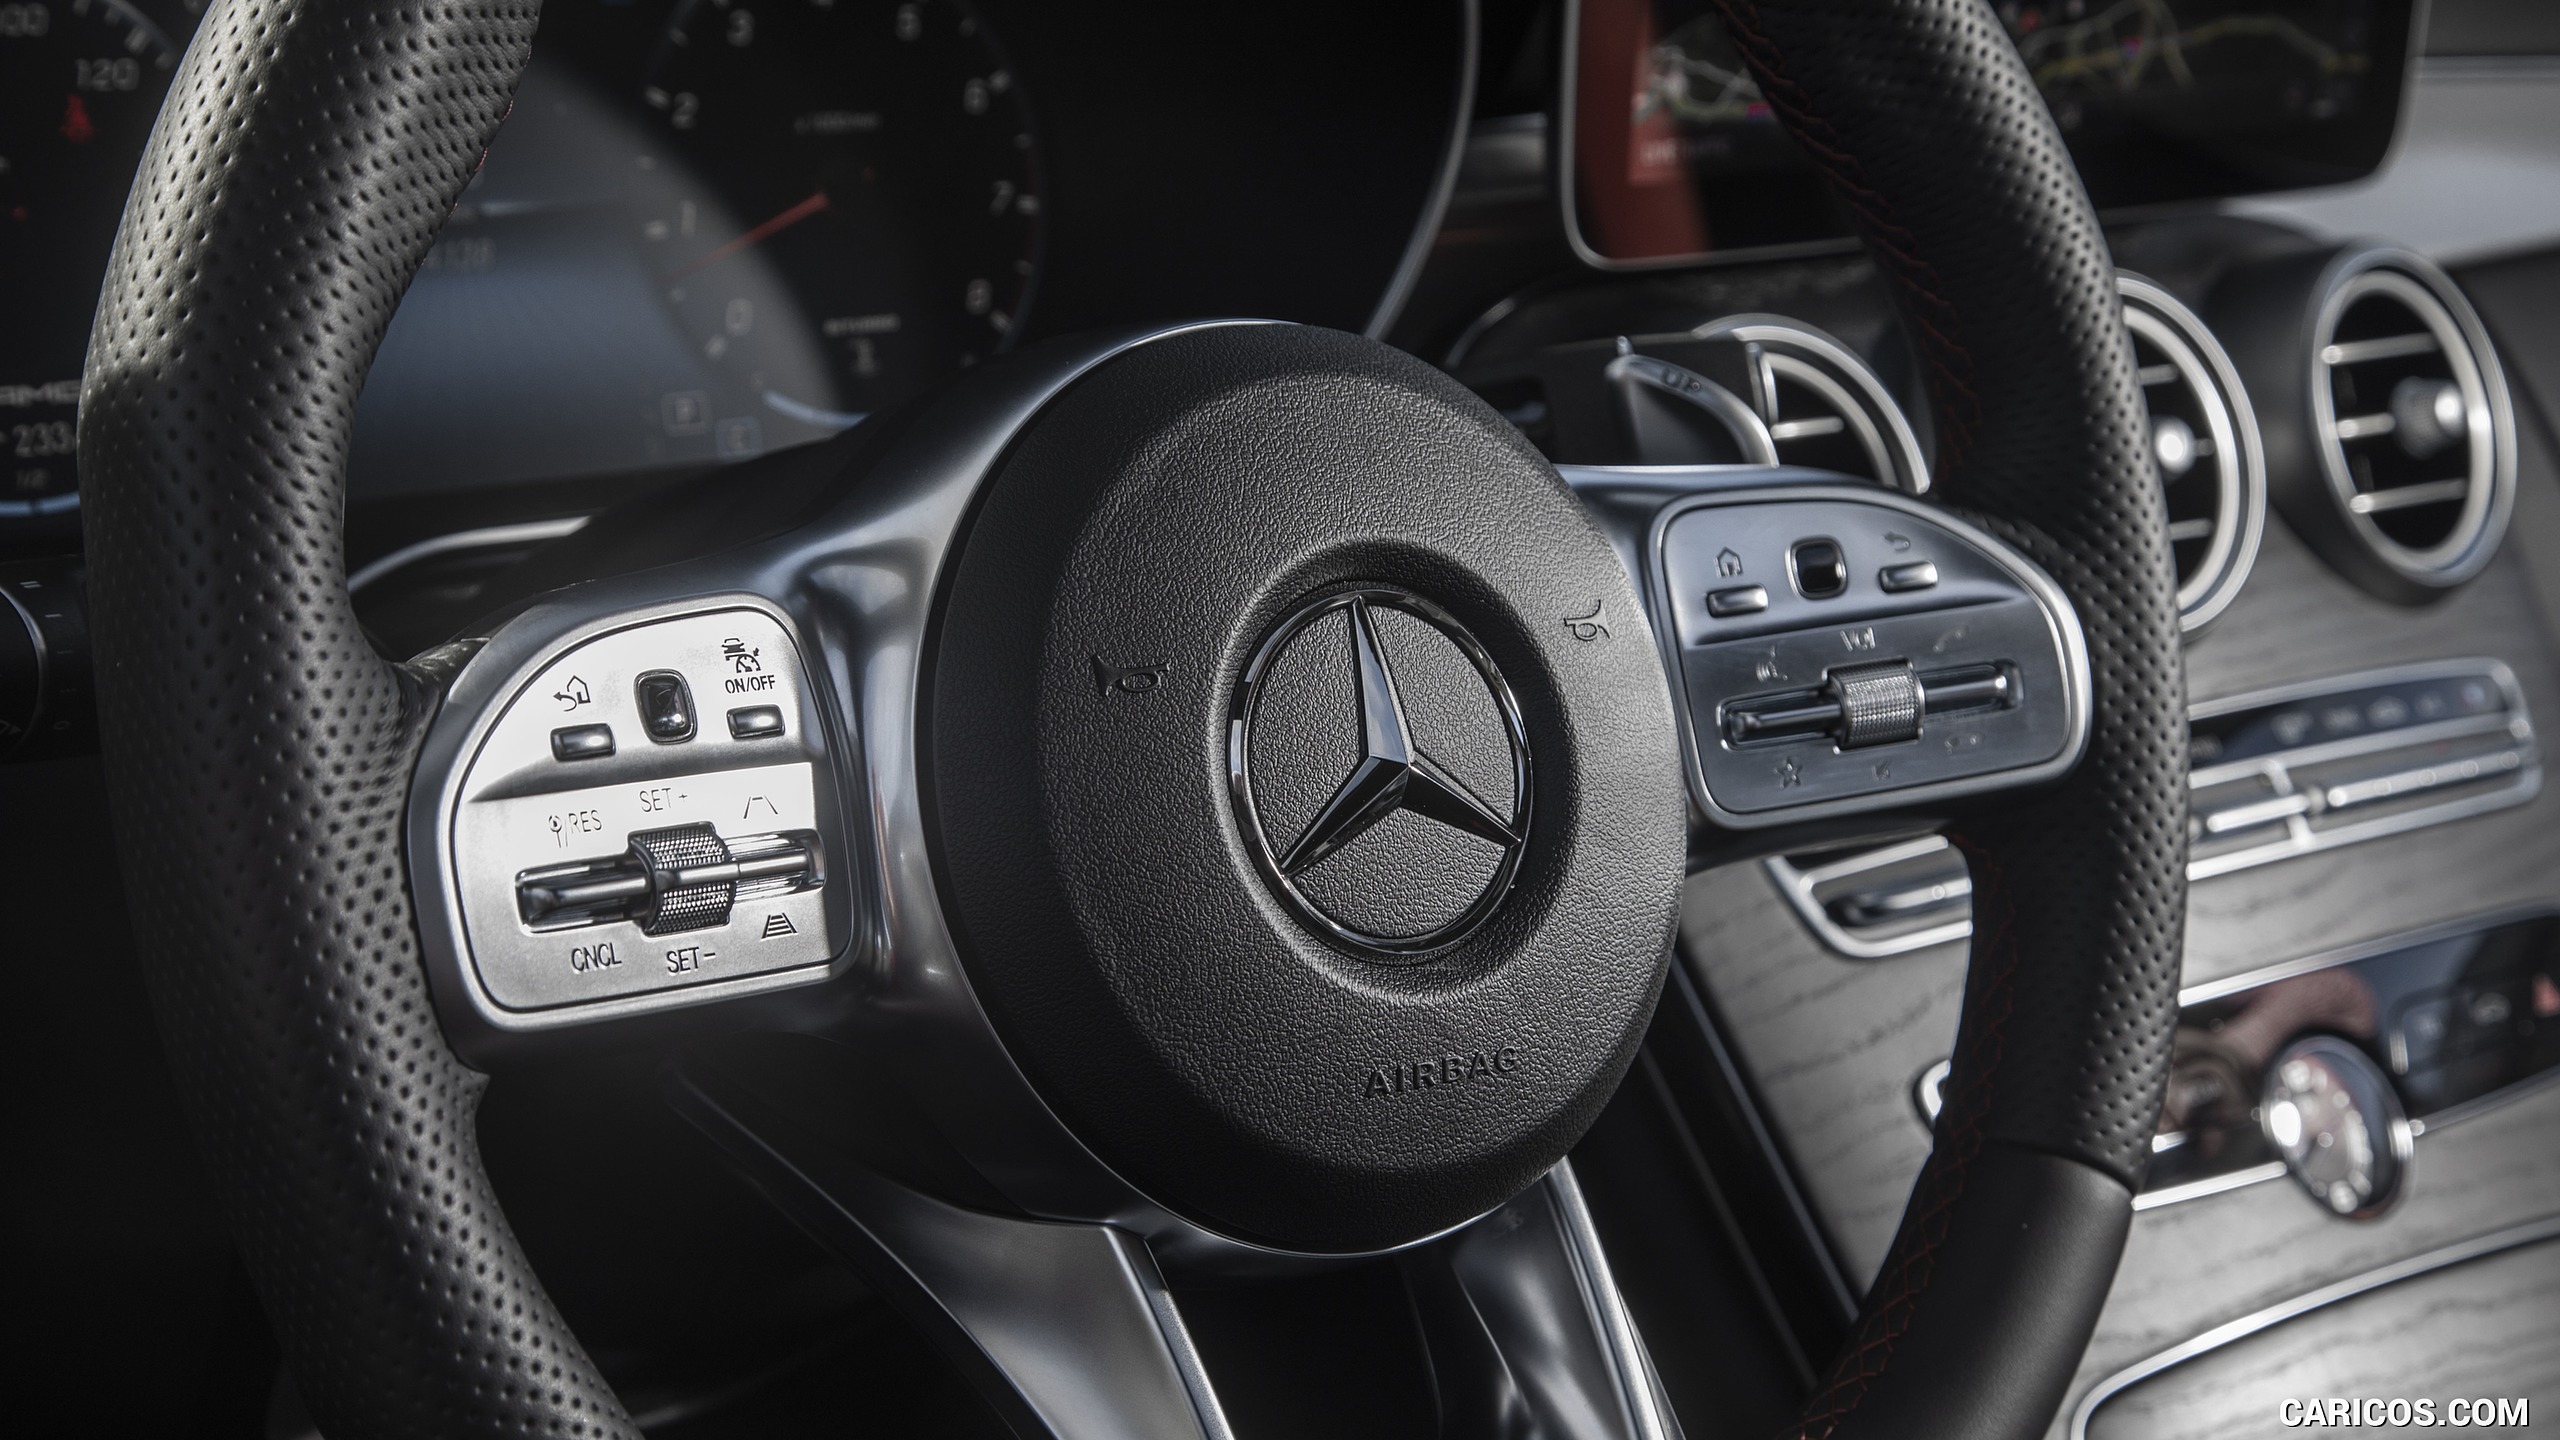 2019 Mercedes-AMG C43 Sedan (US-Spec) - Interior, Steering Wheel, #178 of 192